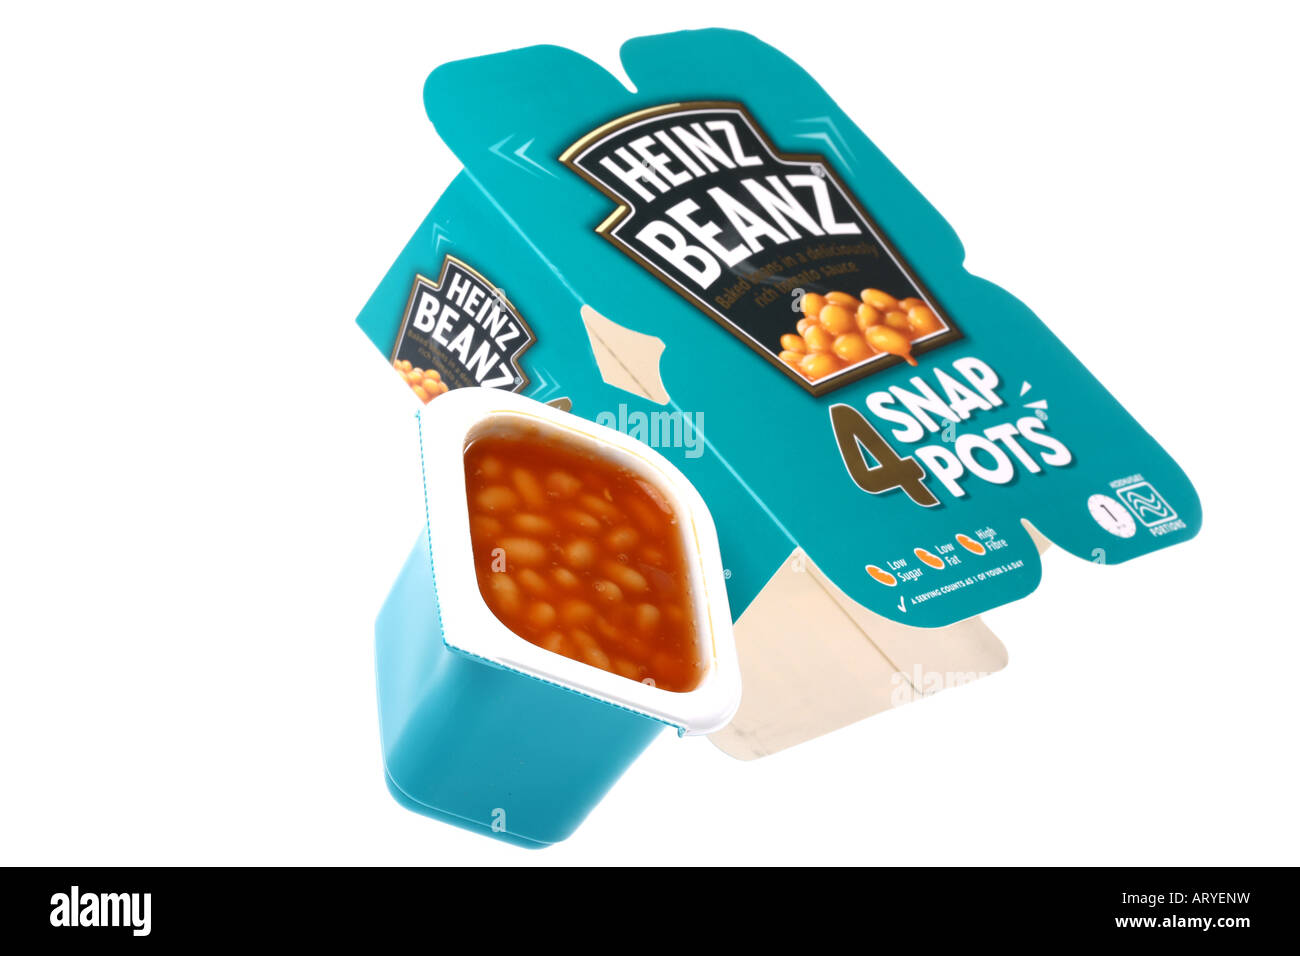 Beans Snap Pots Stock Photo